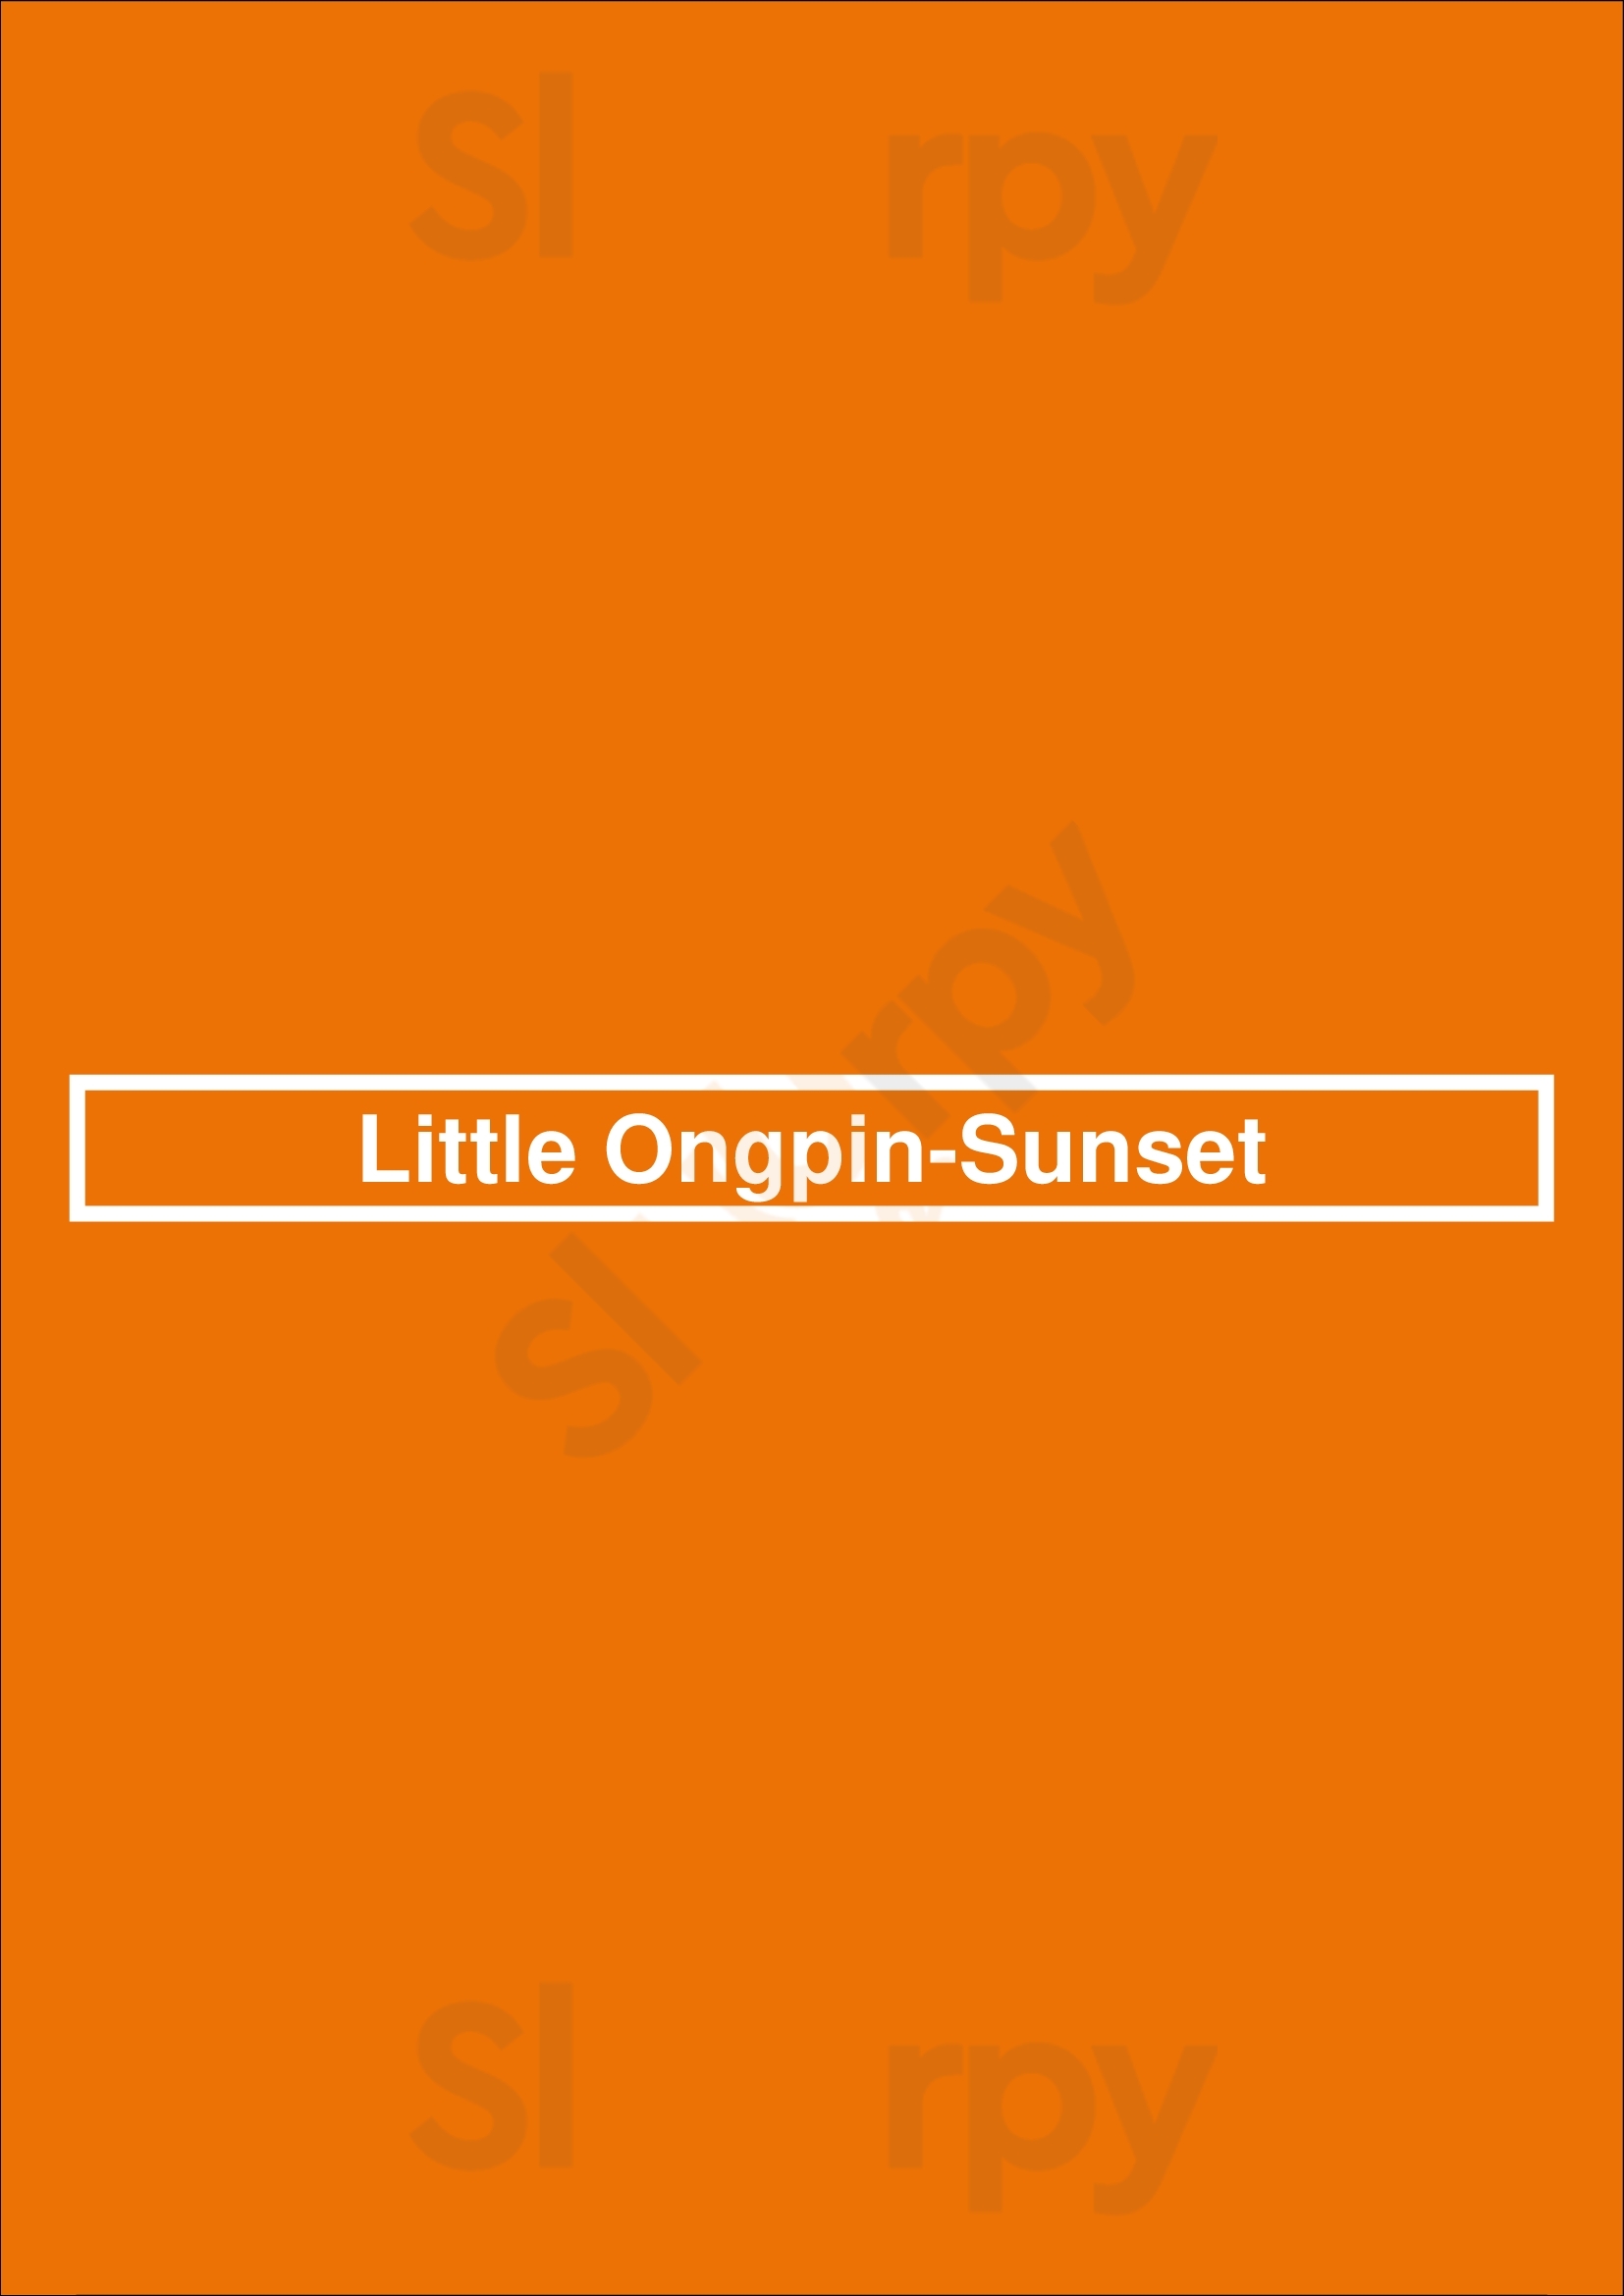 Little Ongpin-sunset Los Angeles Menu - 1